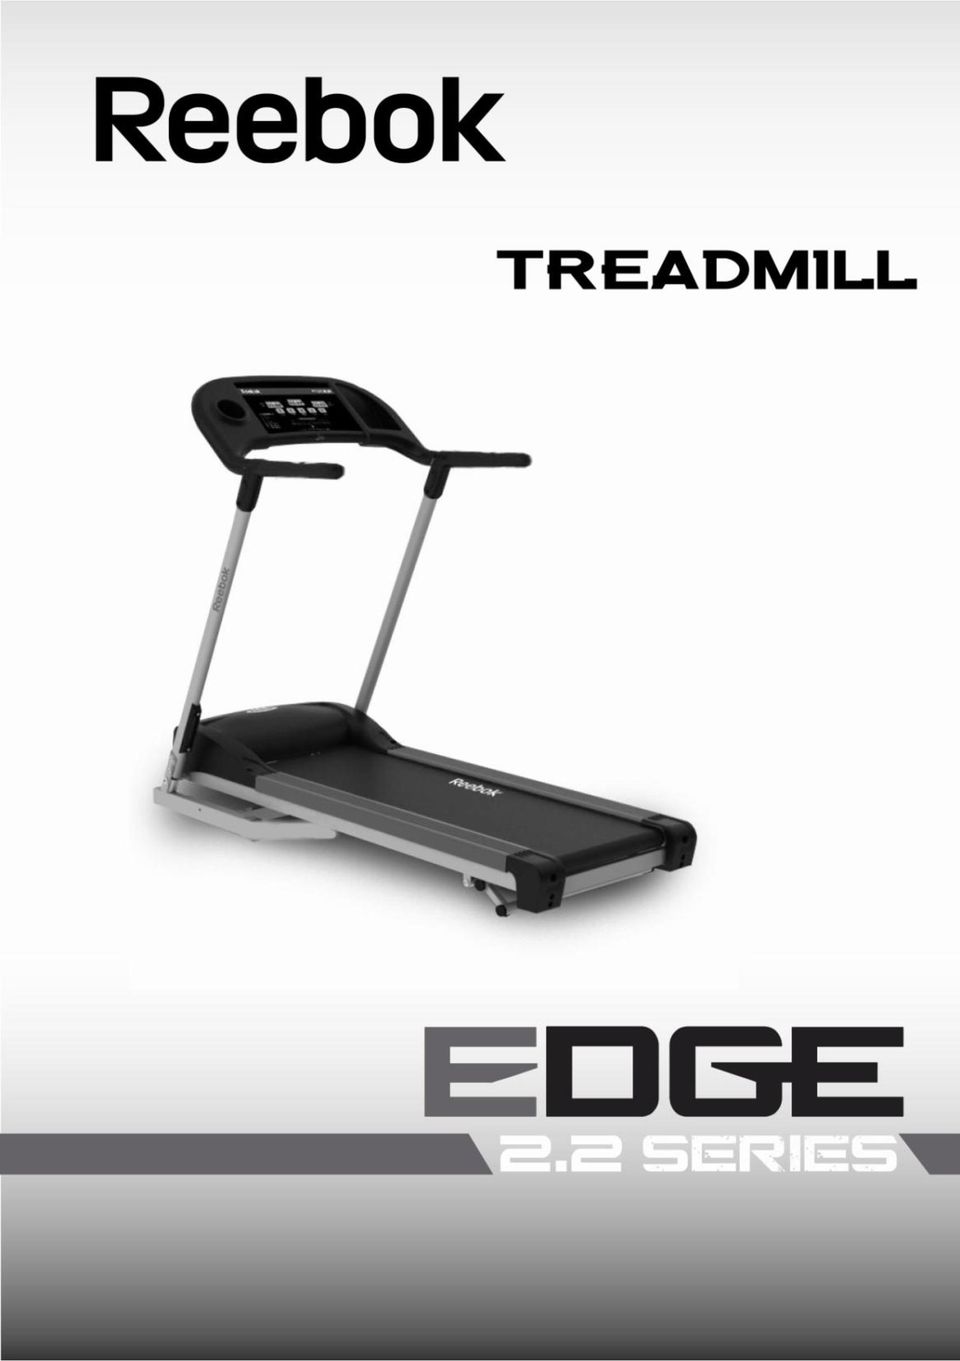 REEBOK Z8 RUN electric folding treadmill running machine